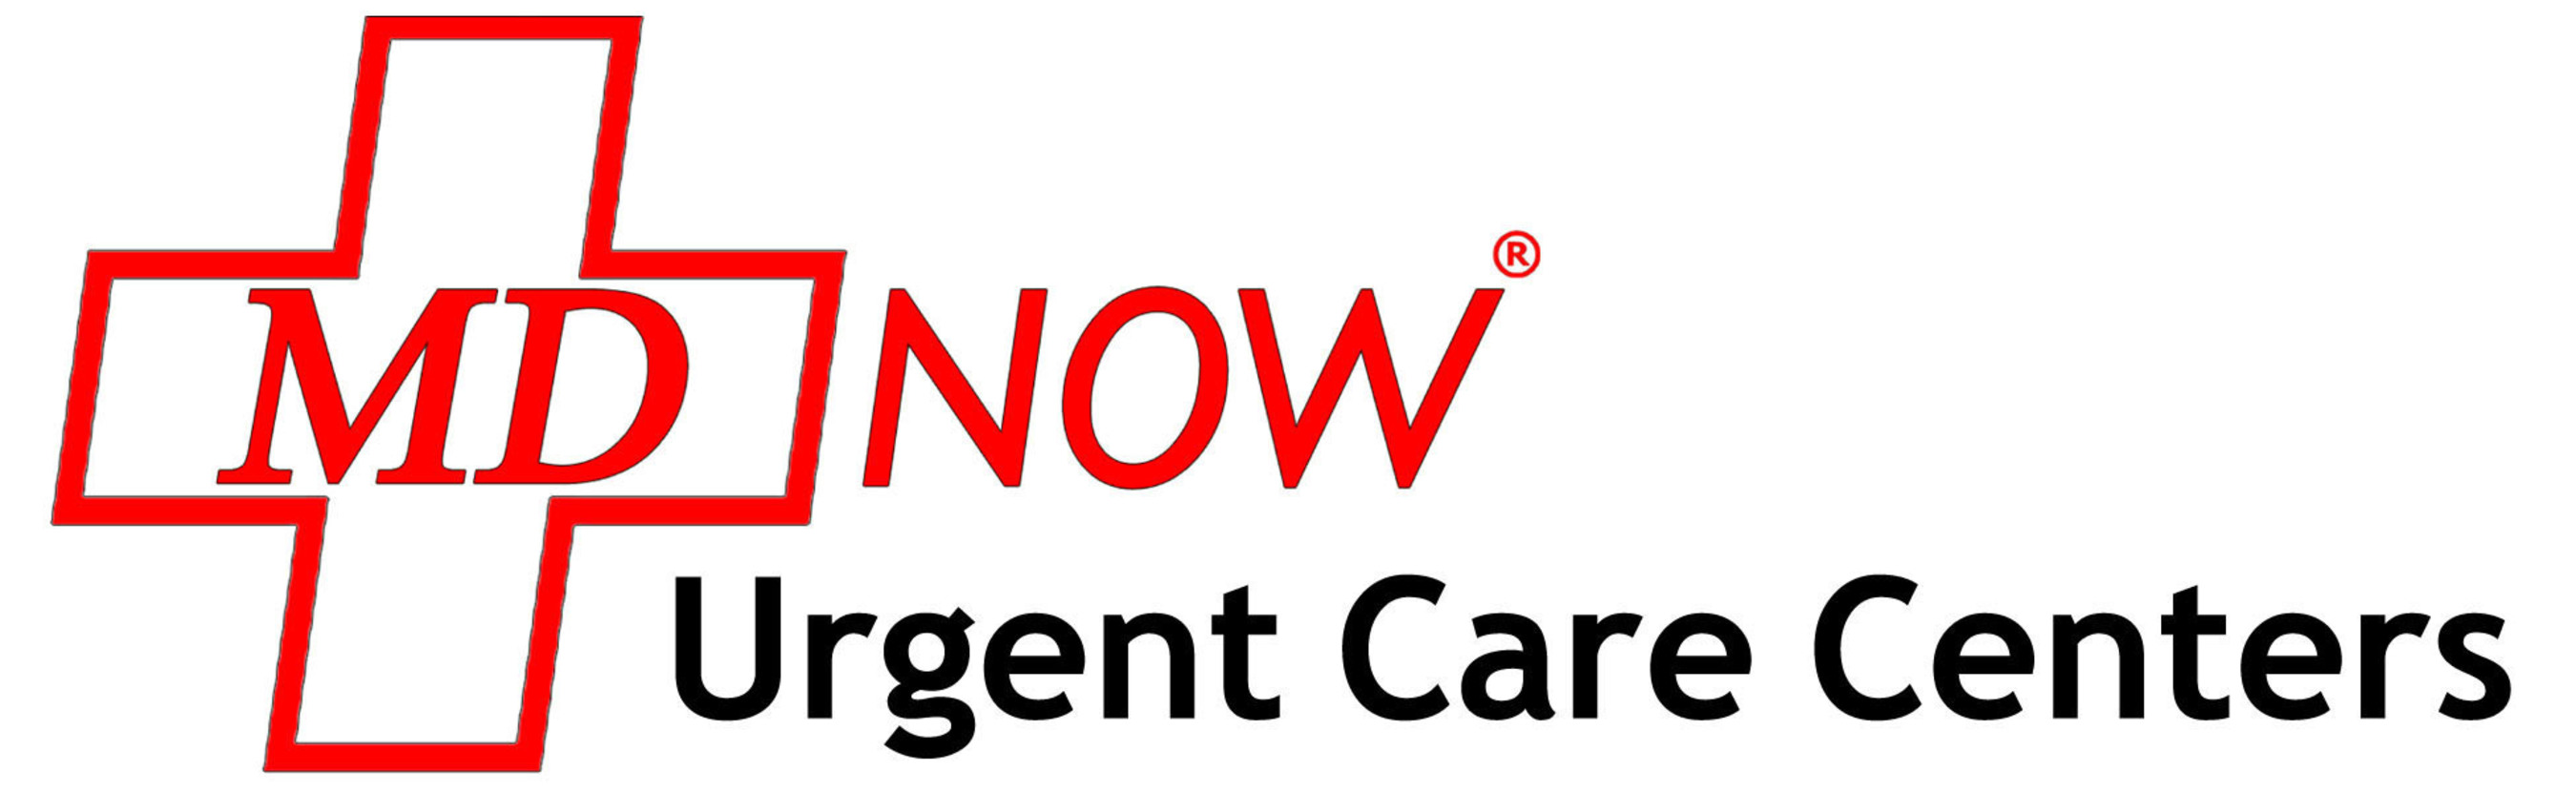 MD Now Urgent Care Centers. (PRNewsFoto/MD Now Medical Centers) (PRNewsFoto/MD NOW MEDICAL CENTERS)